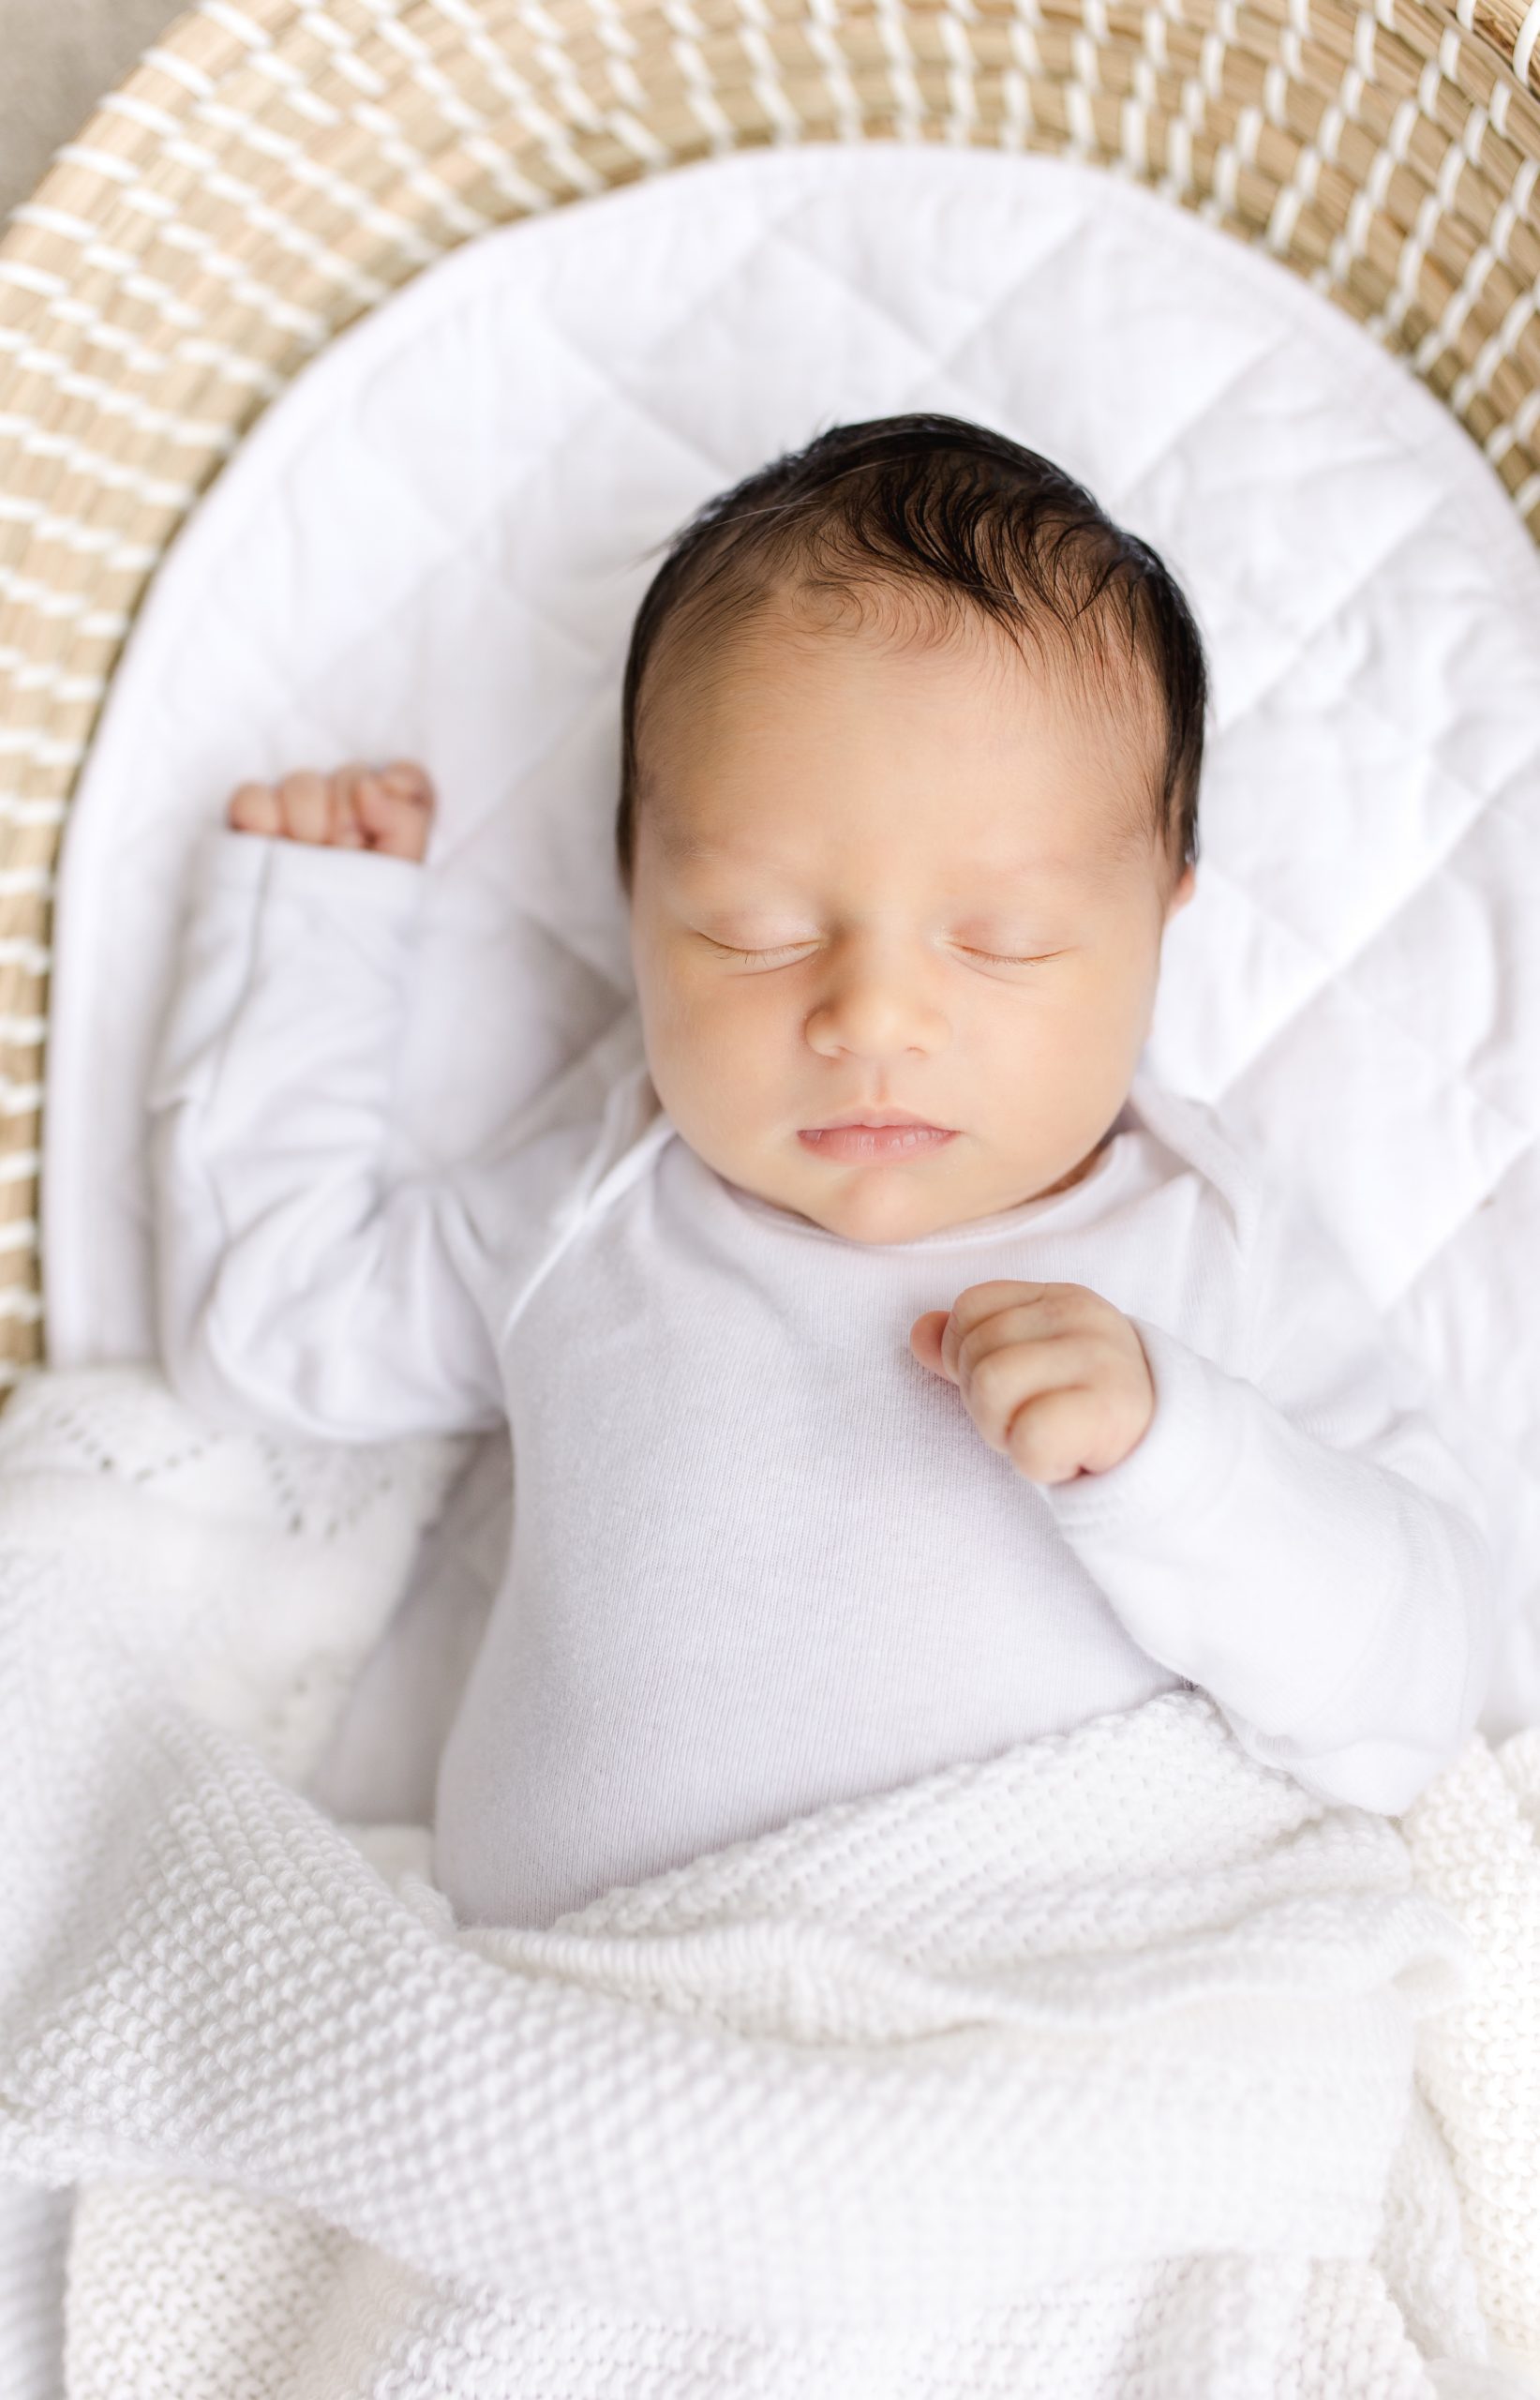 newborn baby asleep in a woven basket by DC newborn photographer